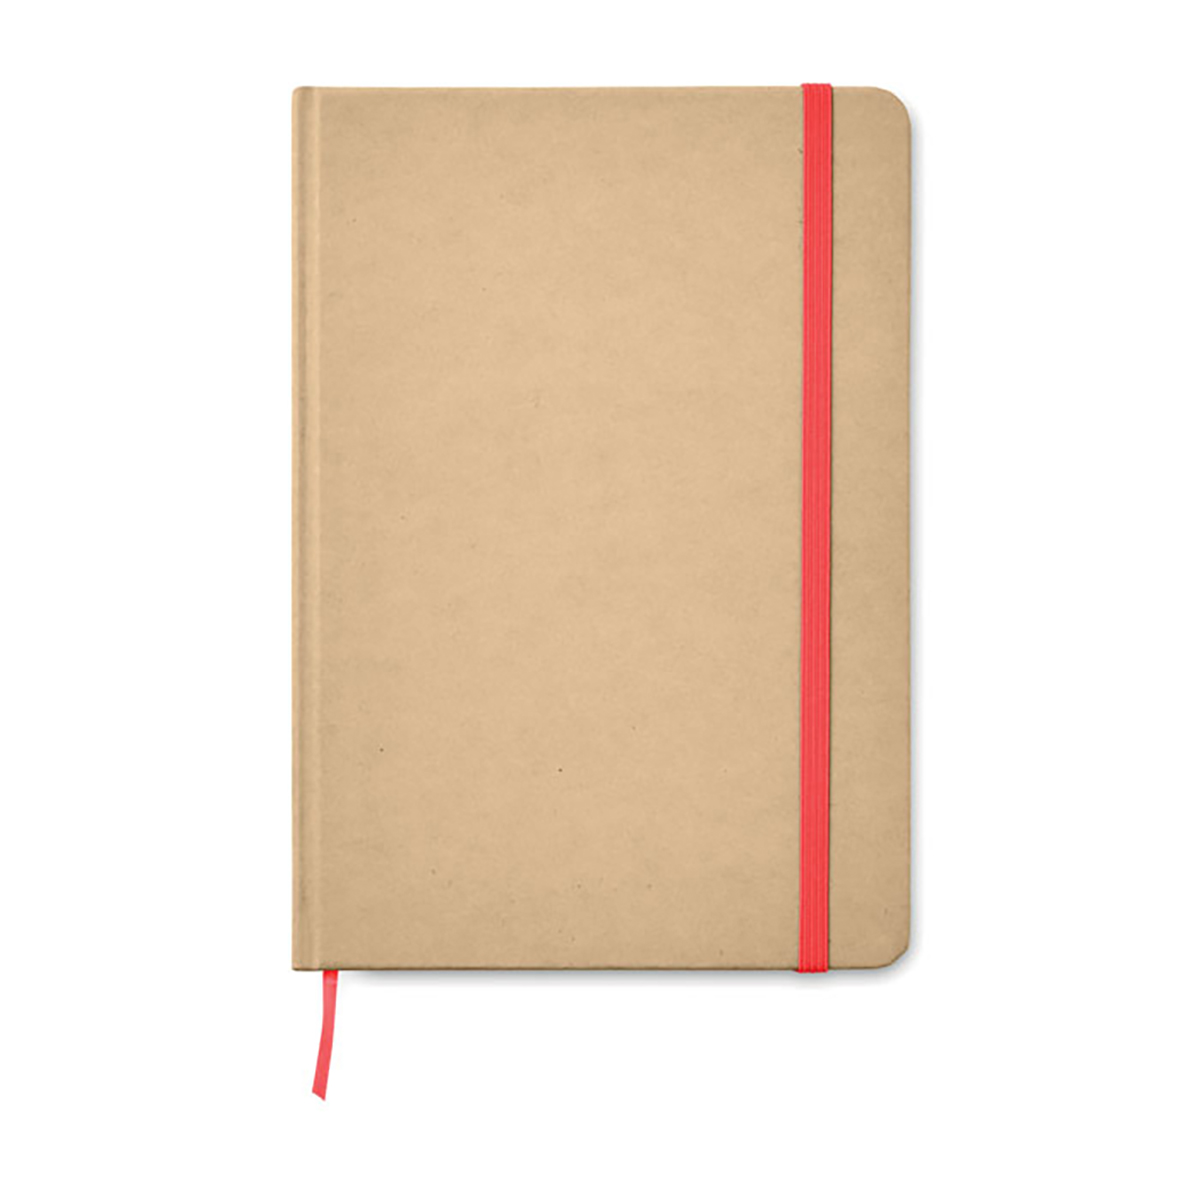 Notebook A5 in materiale riciclato EVERWRITE